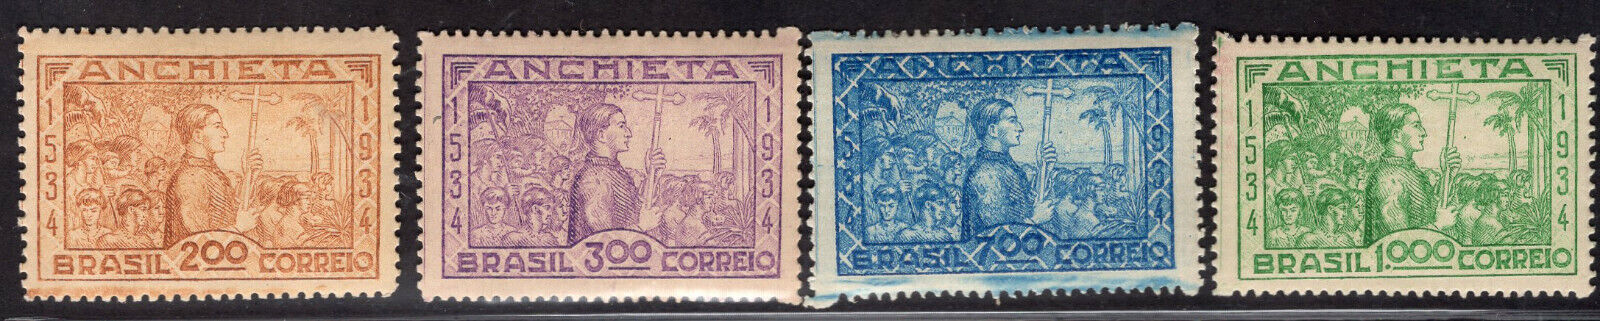 People On Stamps Joseph of Anchieta 1934 Brazil Set